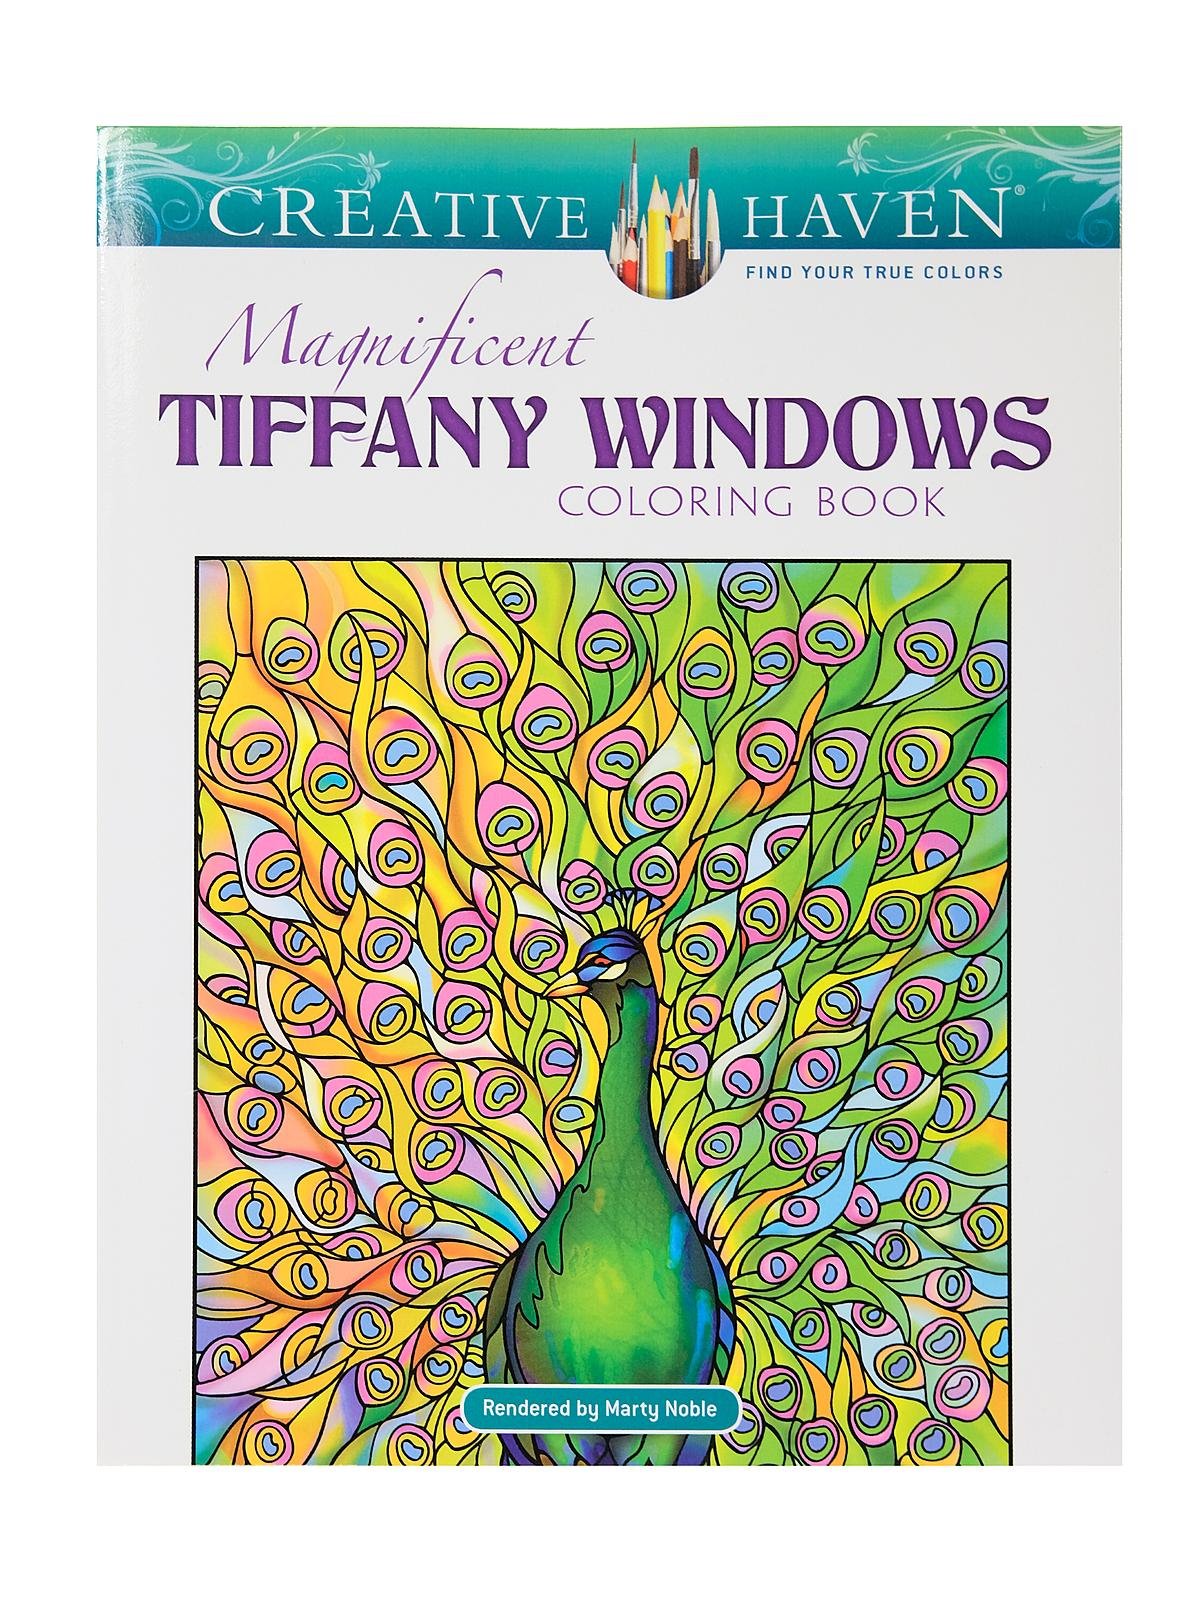 Magnificent Tiffany Windows